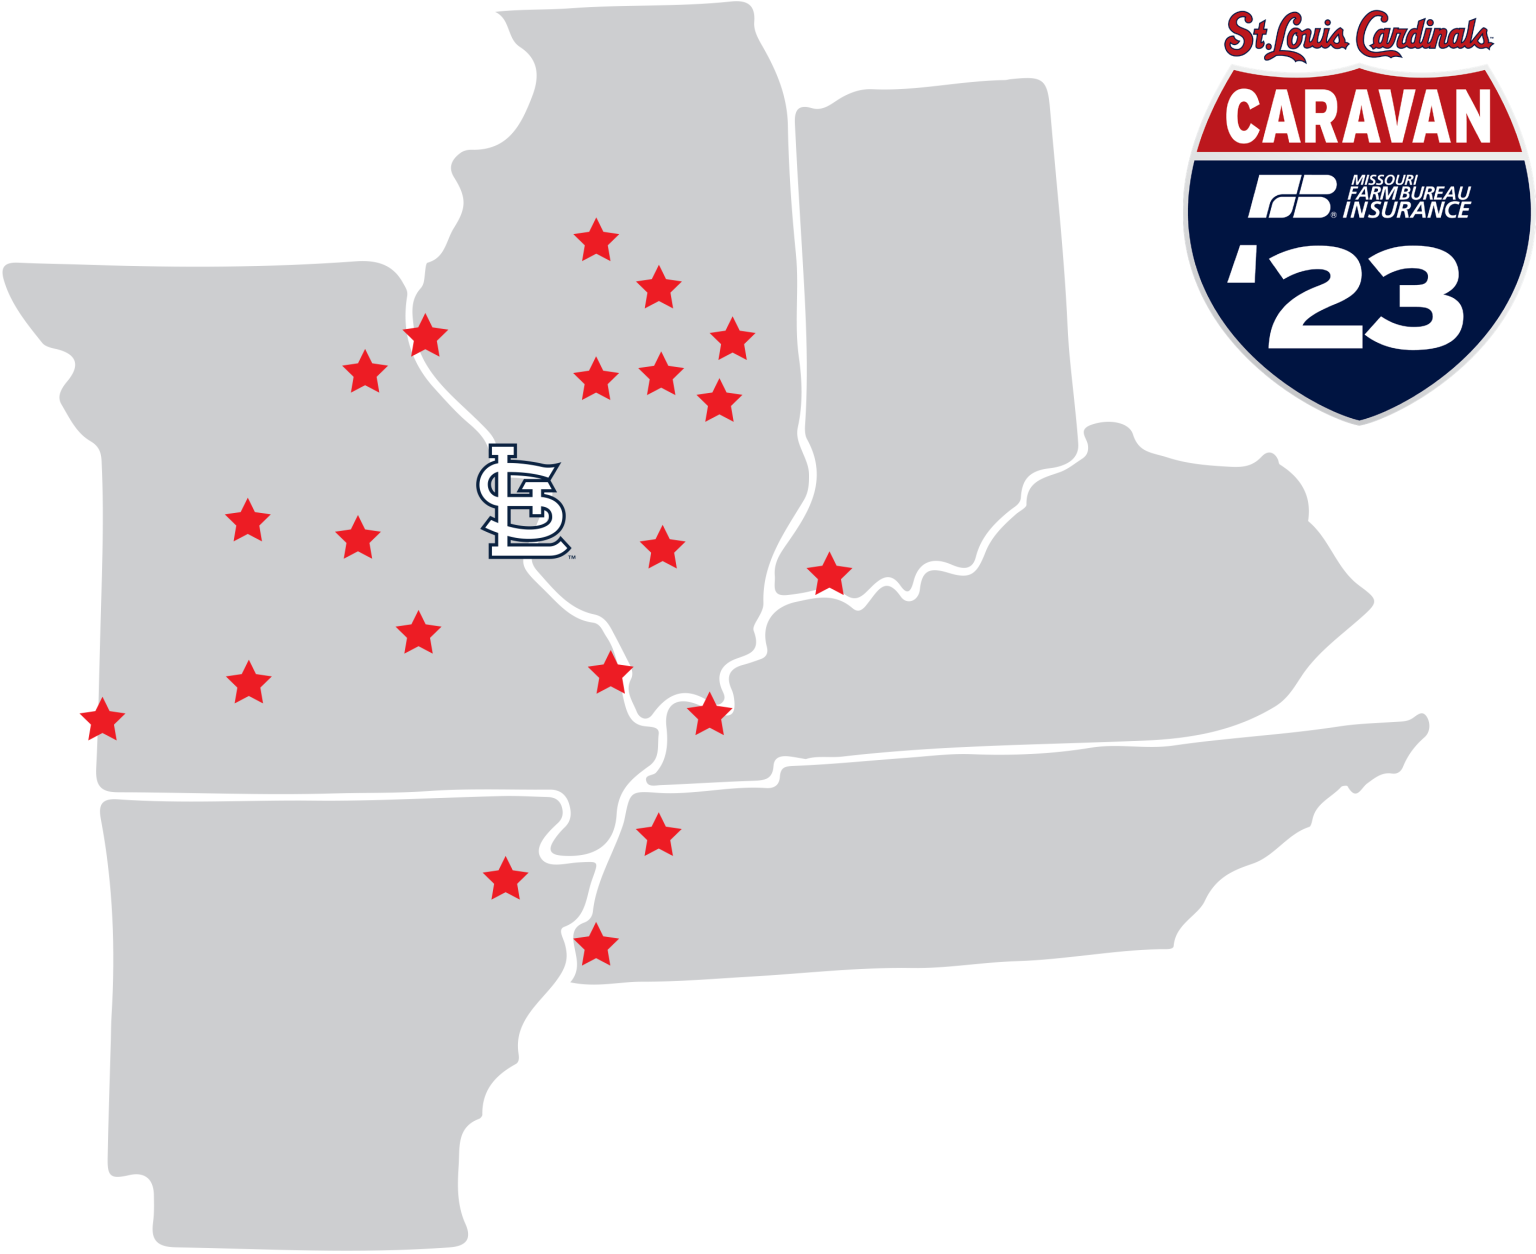 Cardinals Caravan 2023